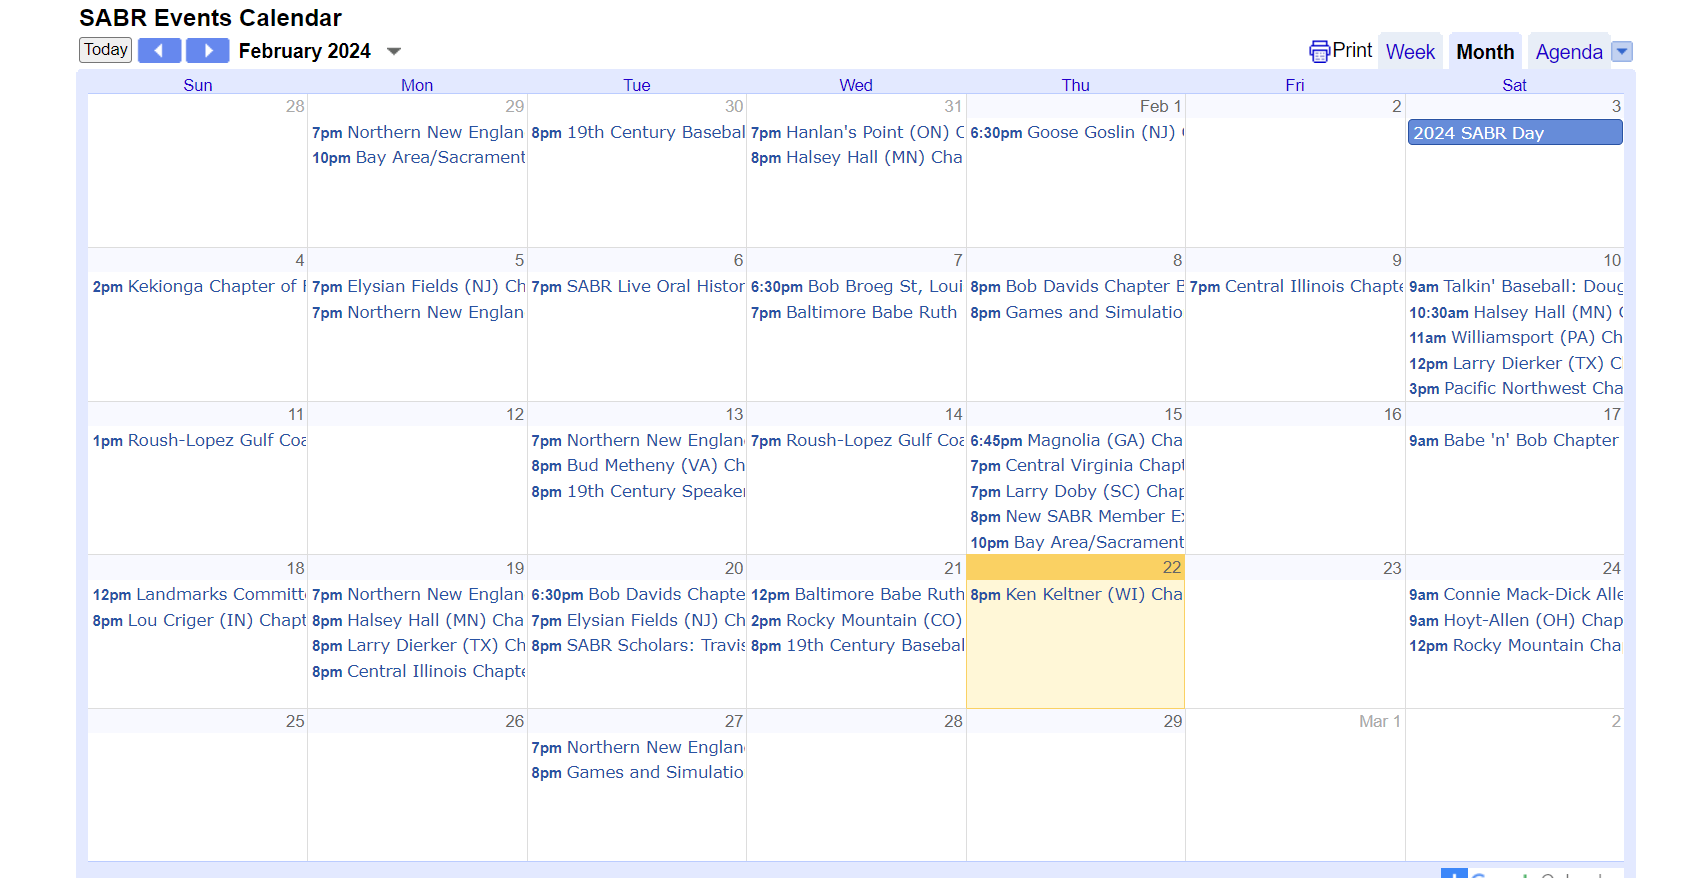 SABR Events Calendar